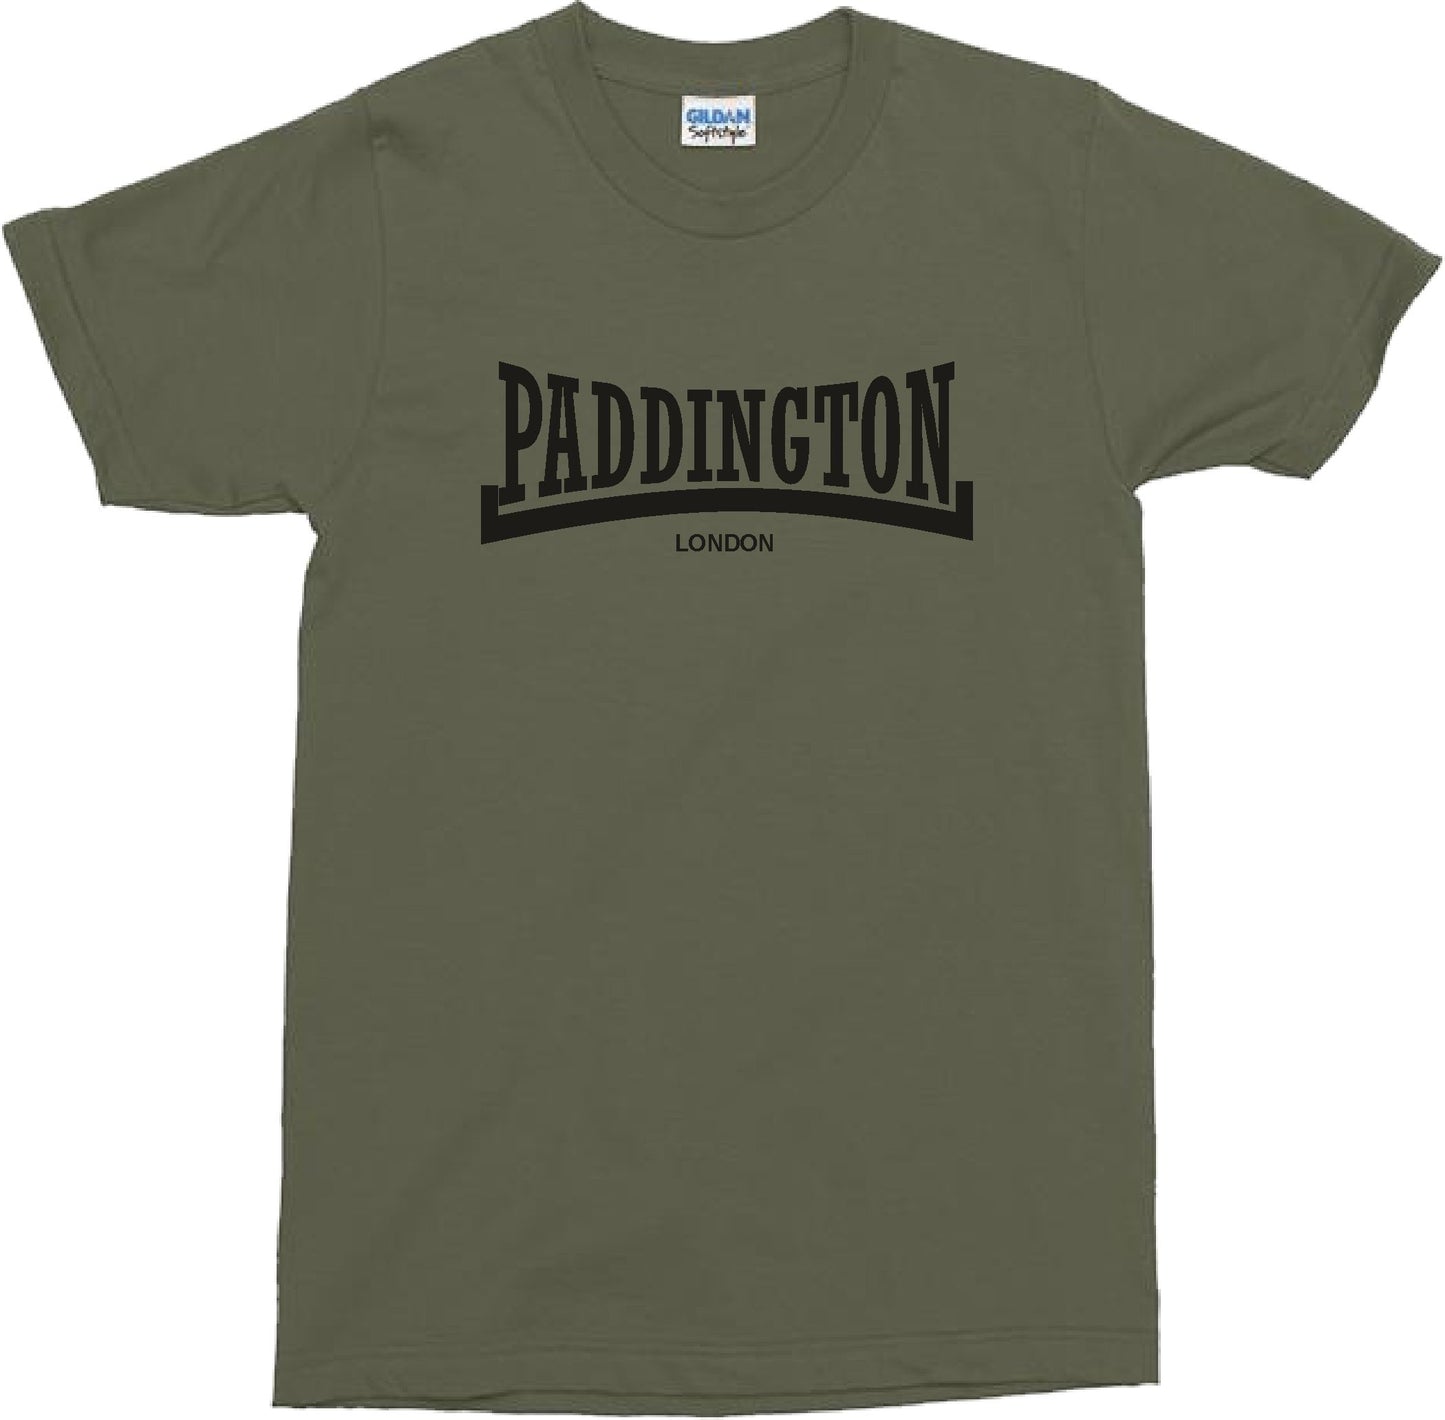 Paddington T-Shirt - London Souvenir, Custom Print Available, Various Colours